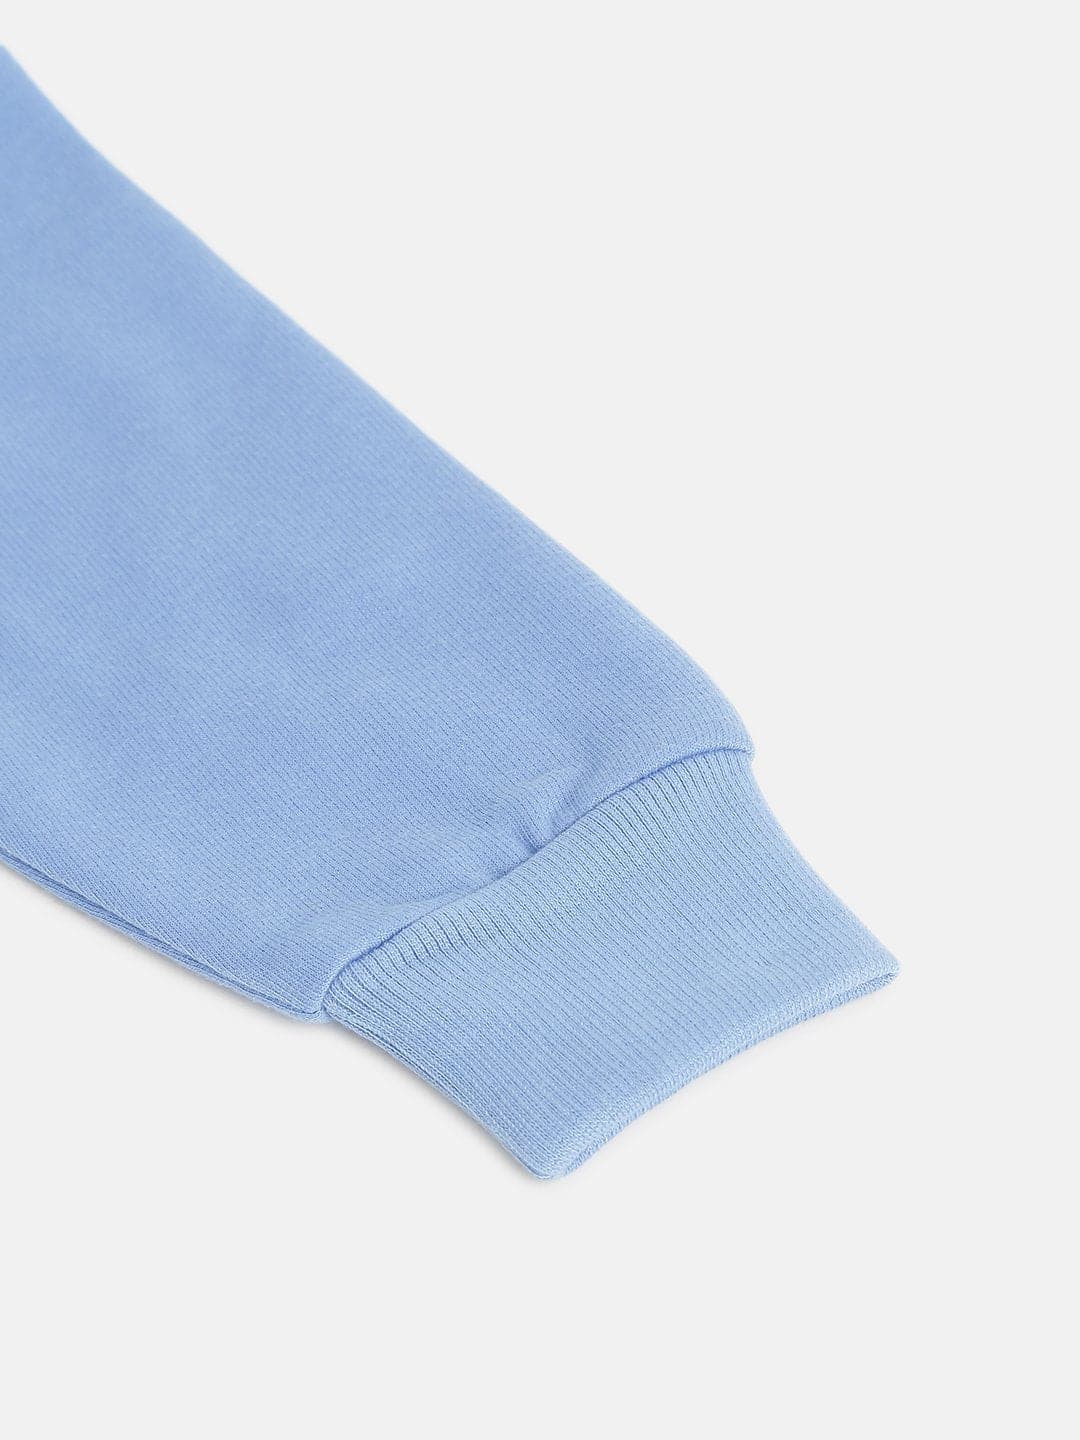 Lyush Blue SHINE BRIGHT Foil Print Crop Sweatshirt For Girls - Distacart